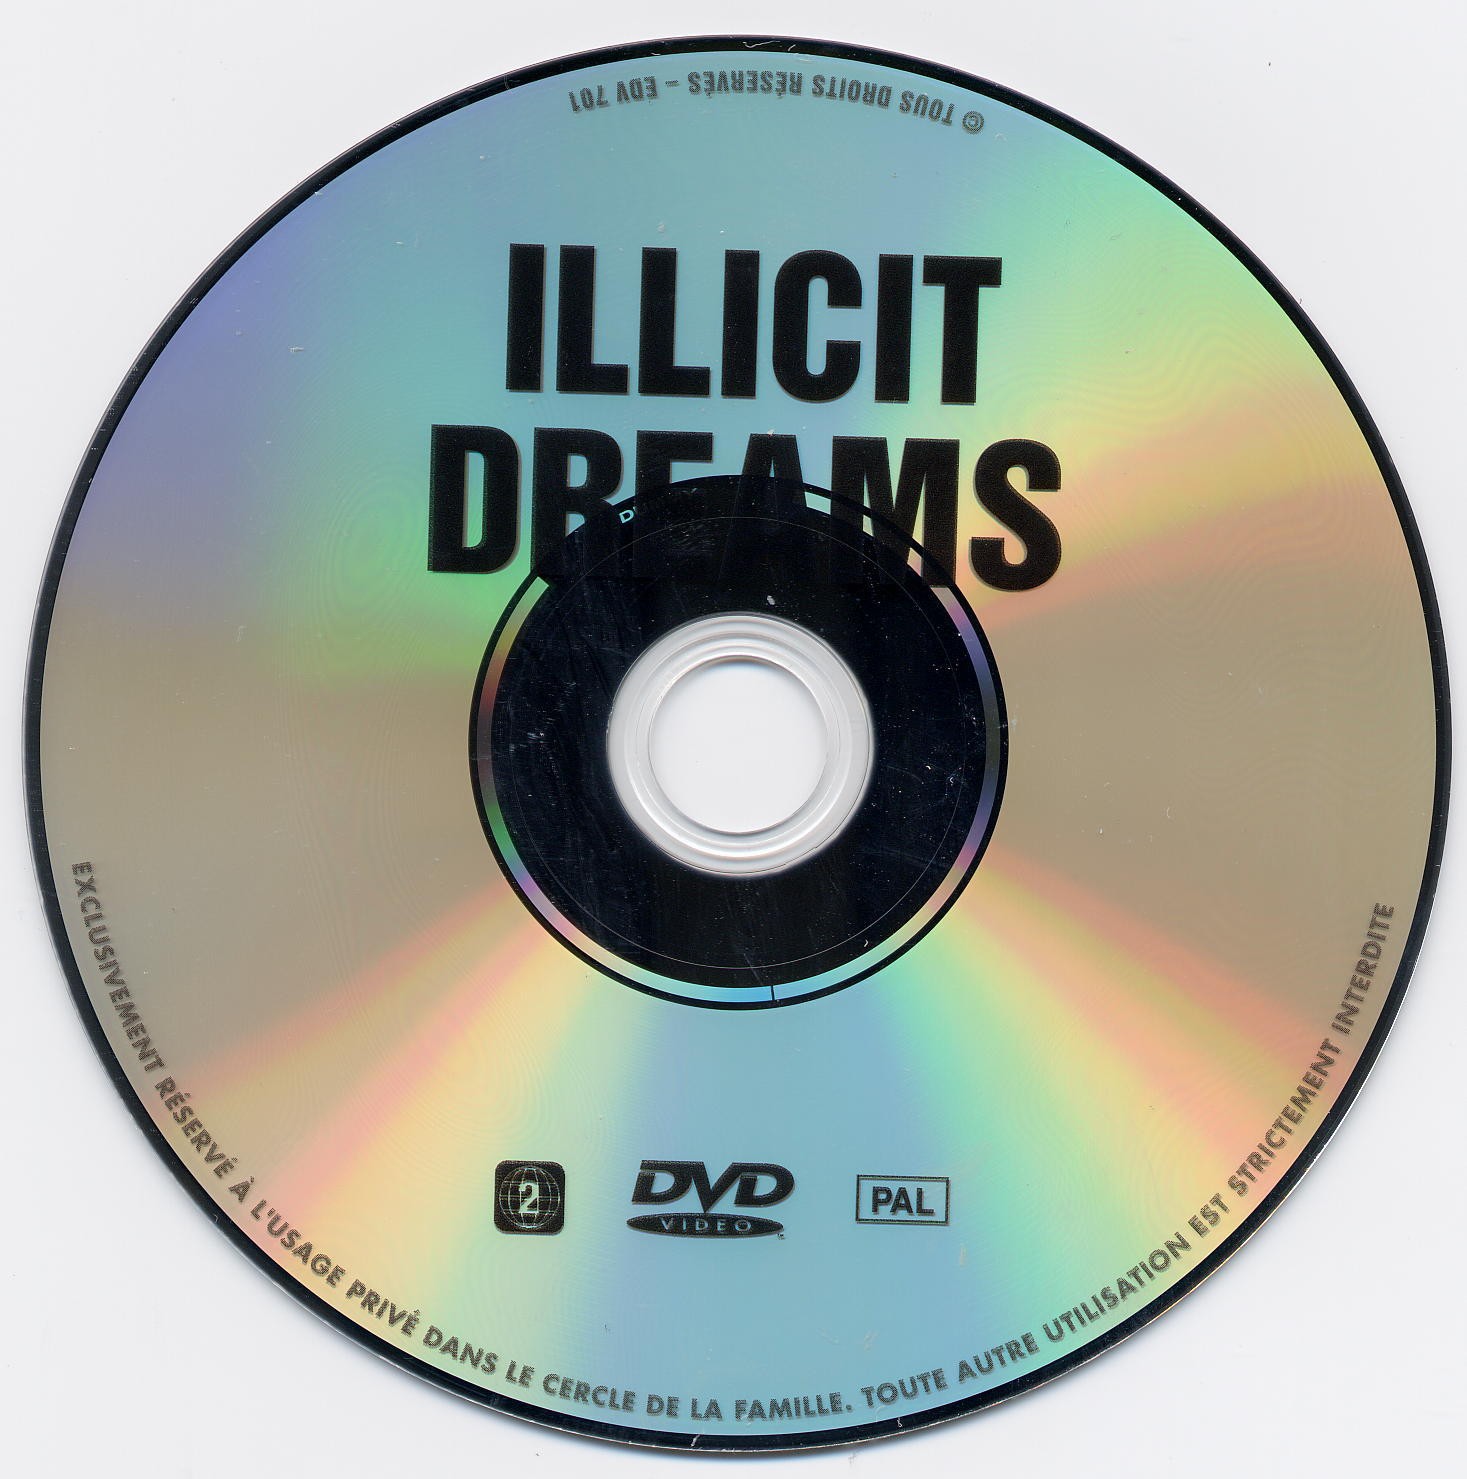 Illicit dreams